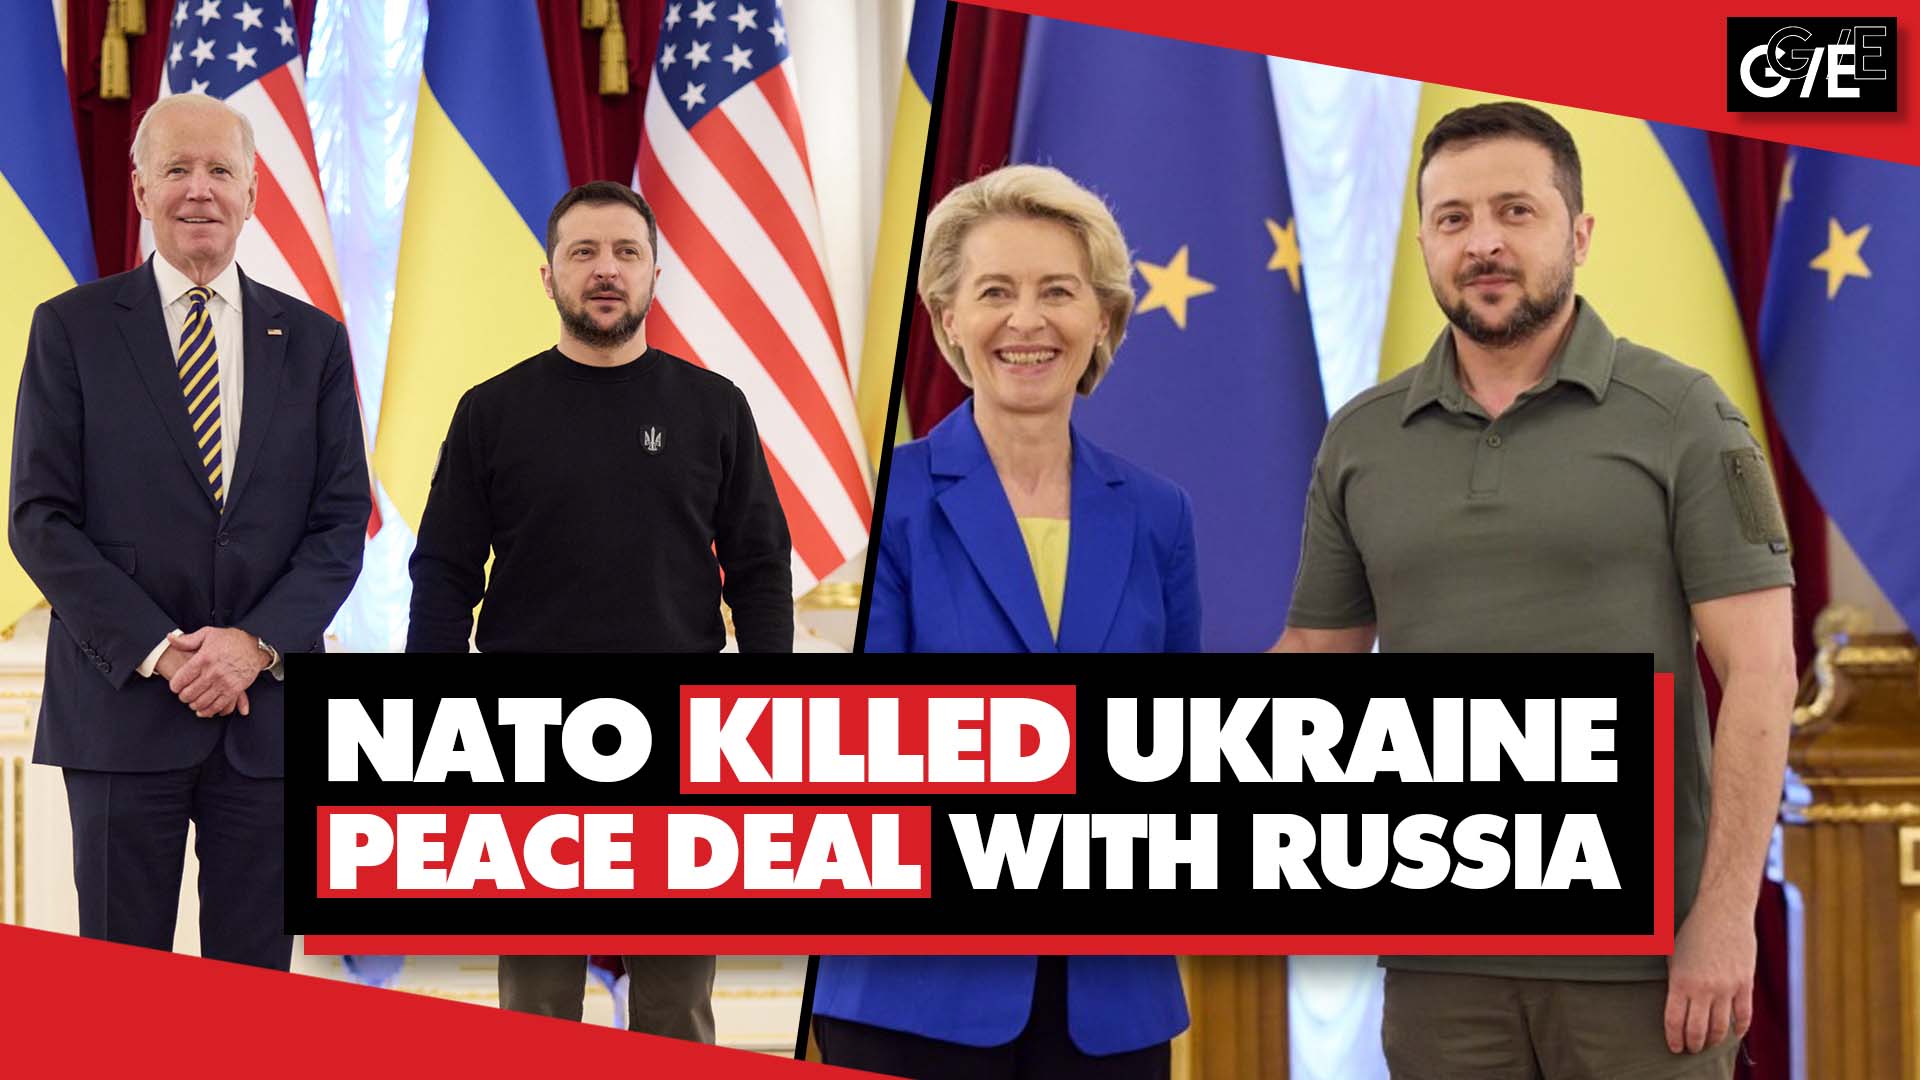 NATO US killed Ukraine Russia peace deal